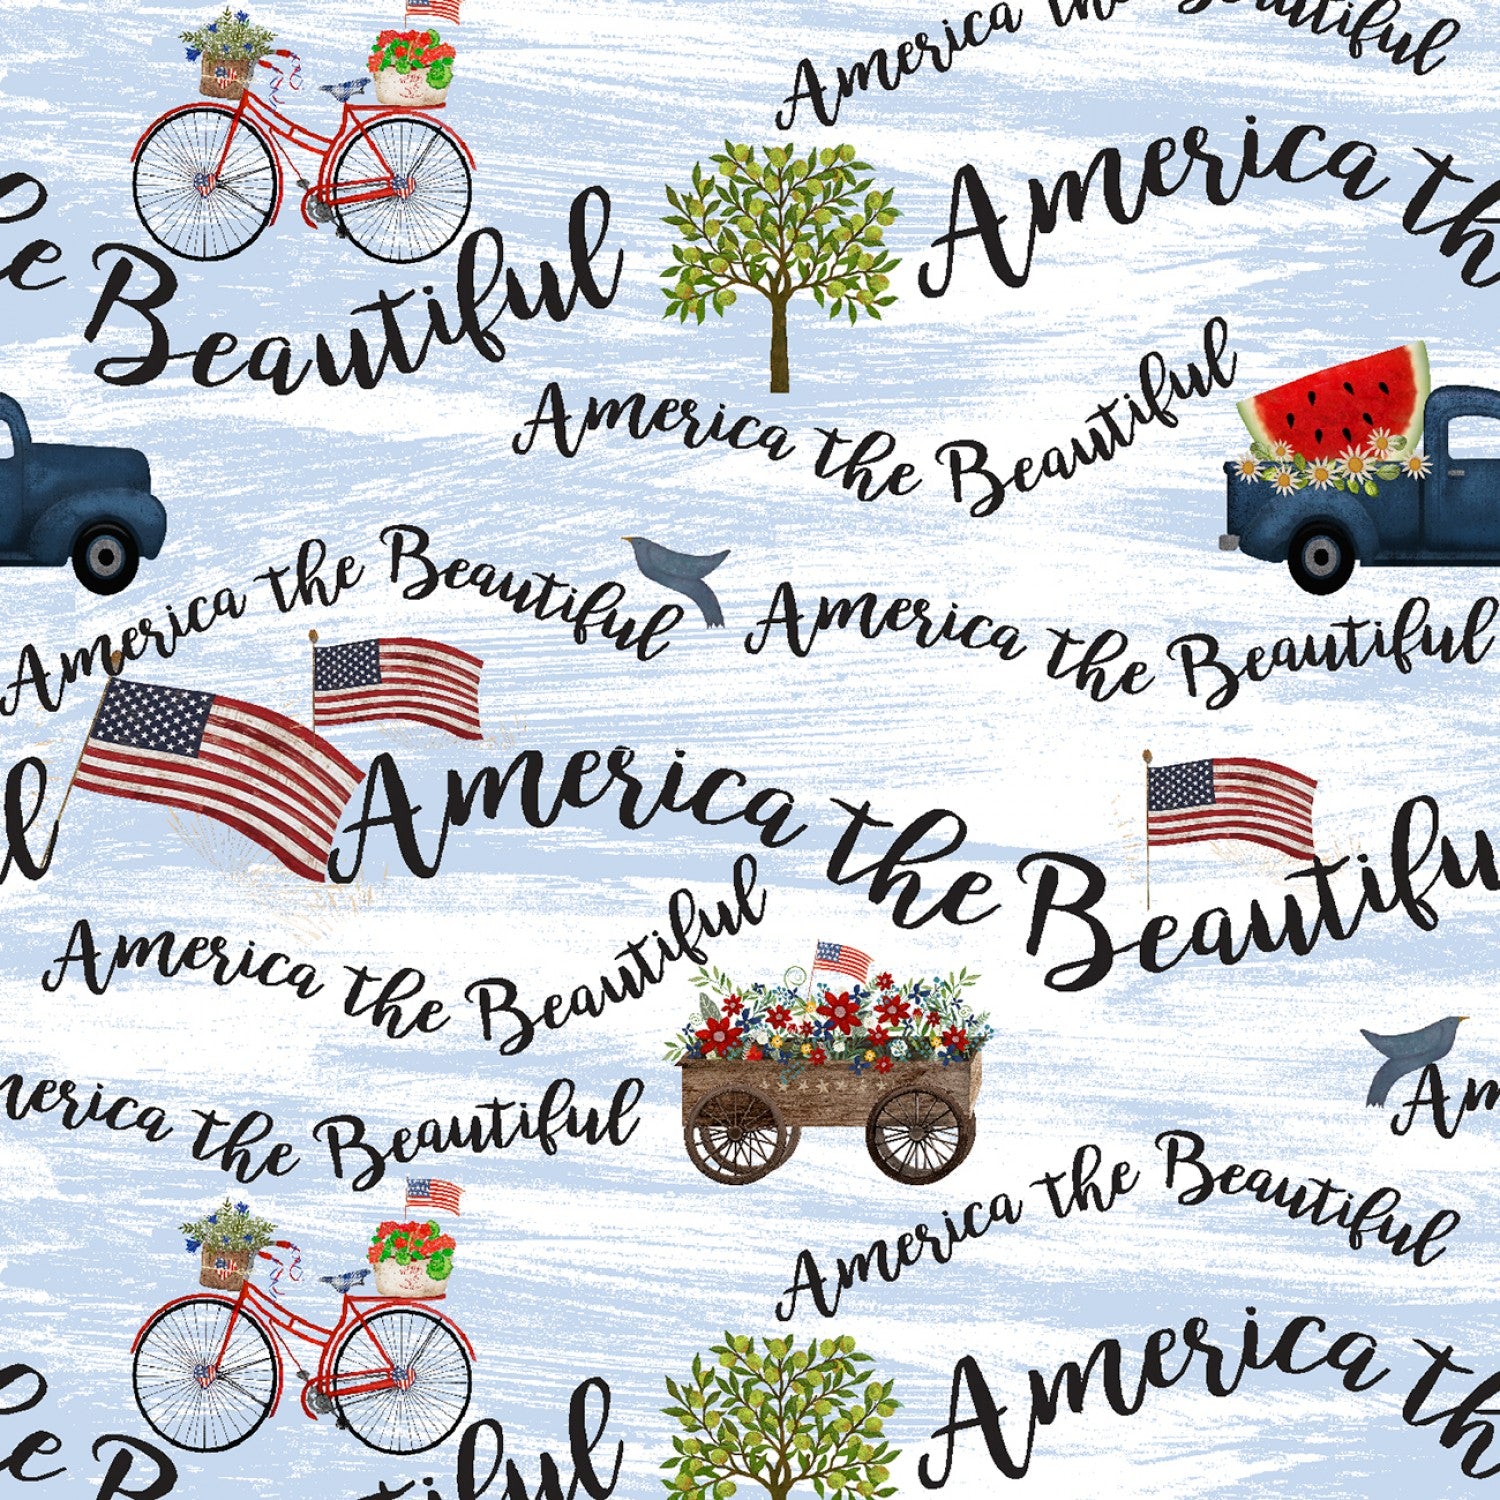 Sweet Land of Liberty - Beautiful Lyrics by Beth Albert